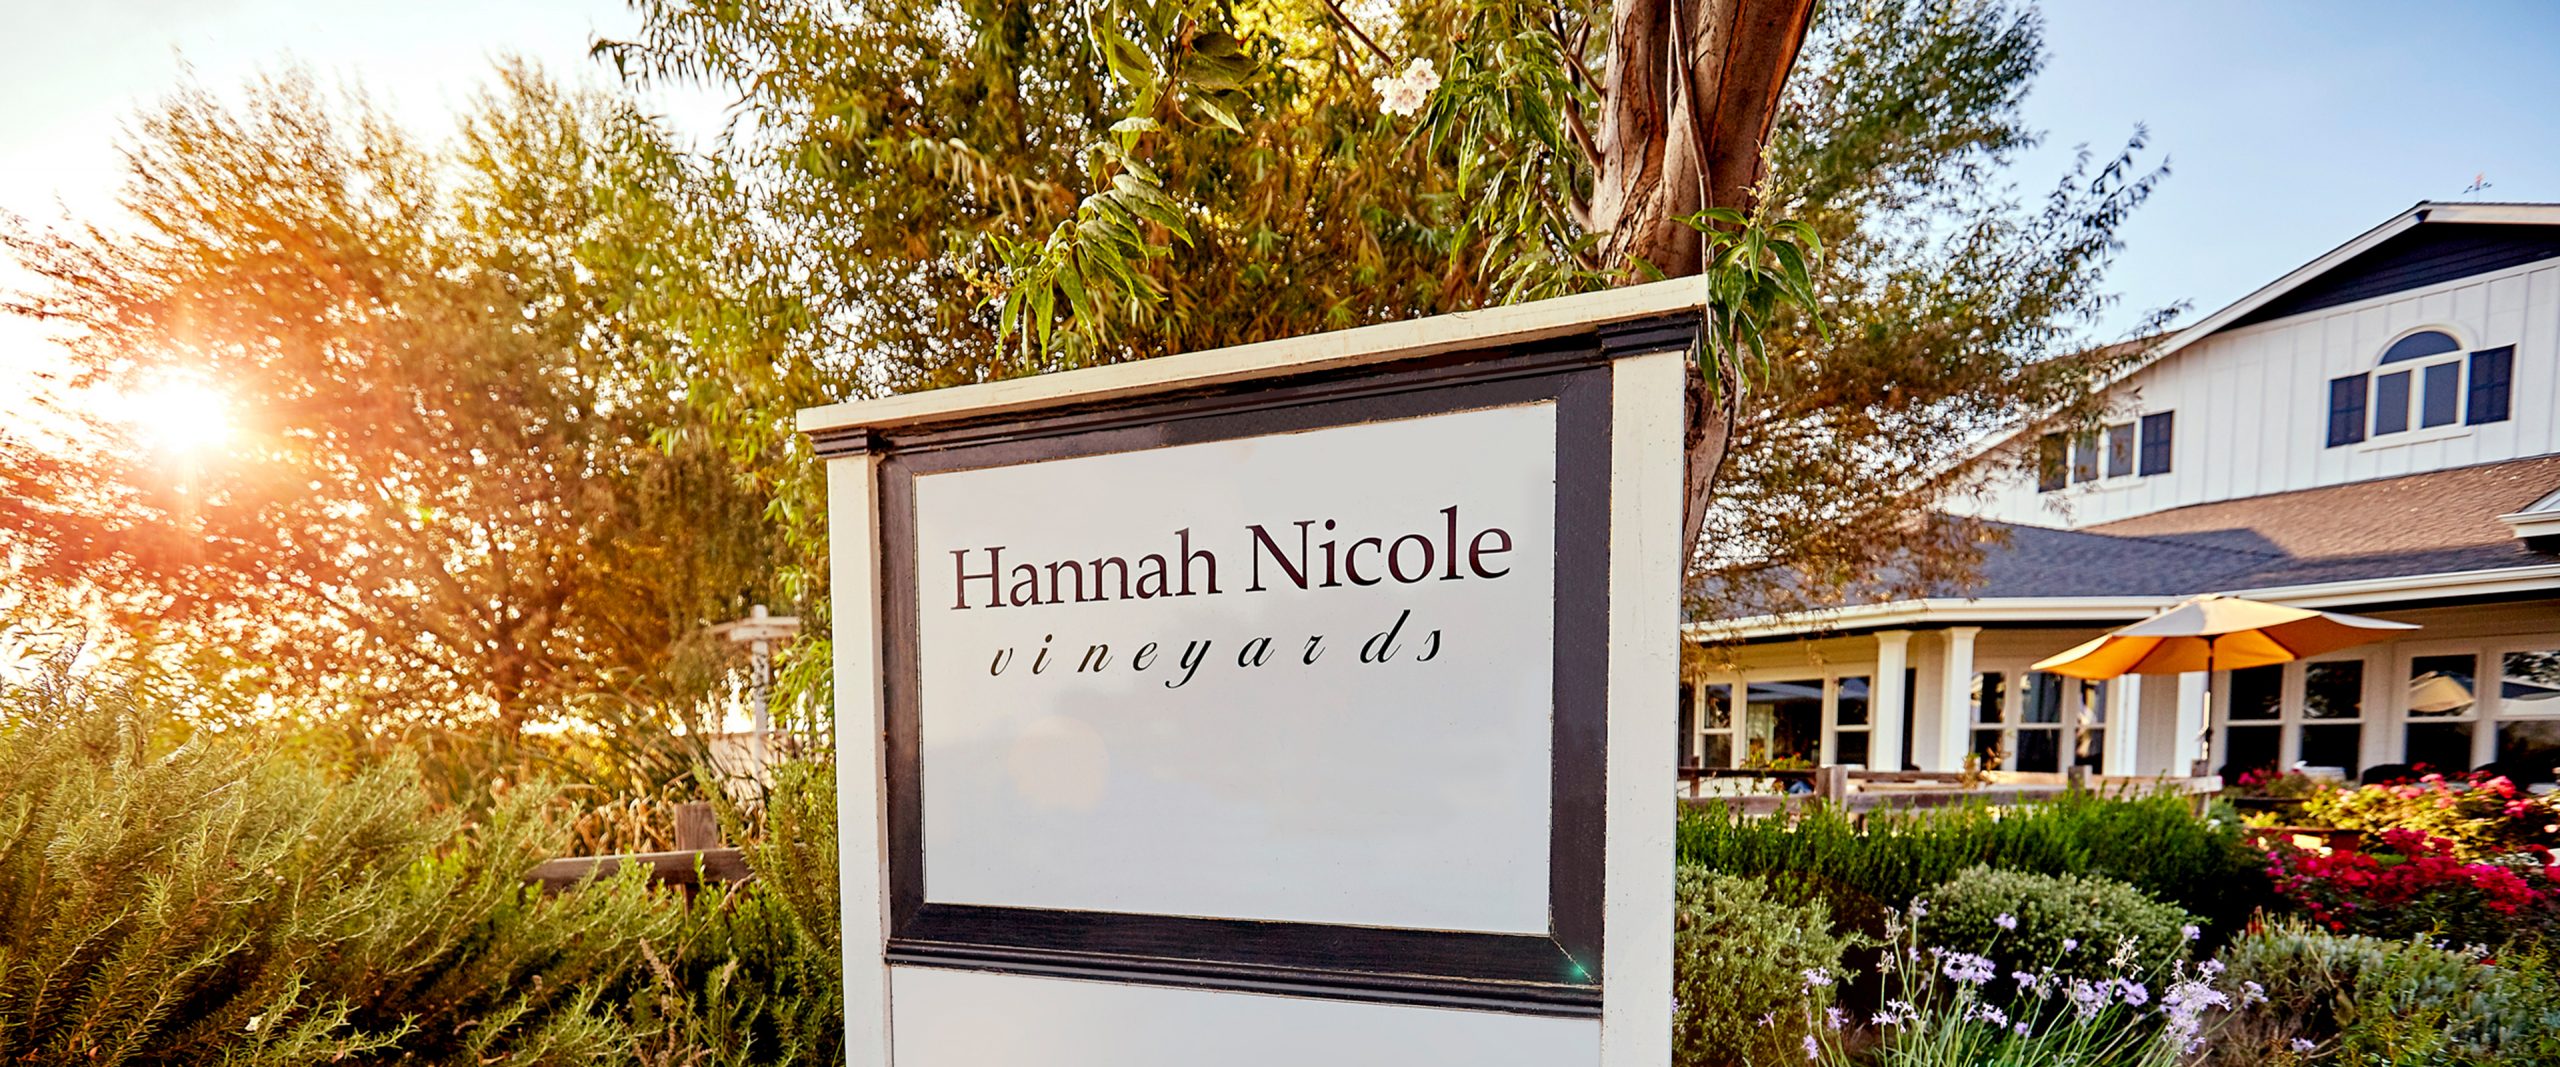 Hannah Nicole Vineyards Sign